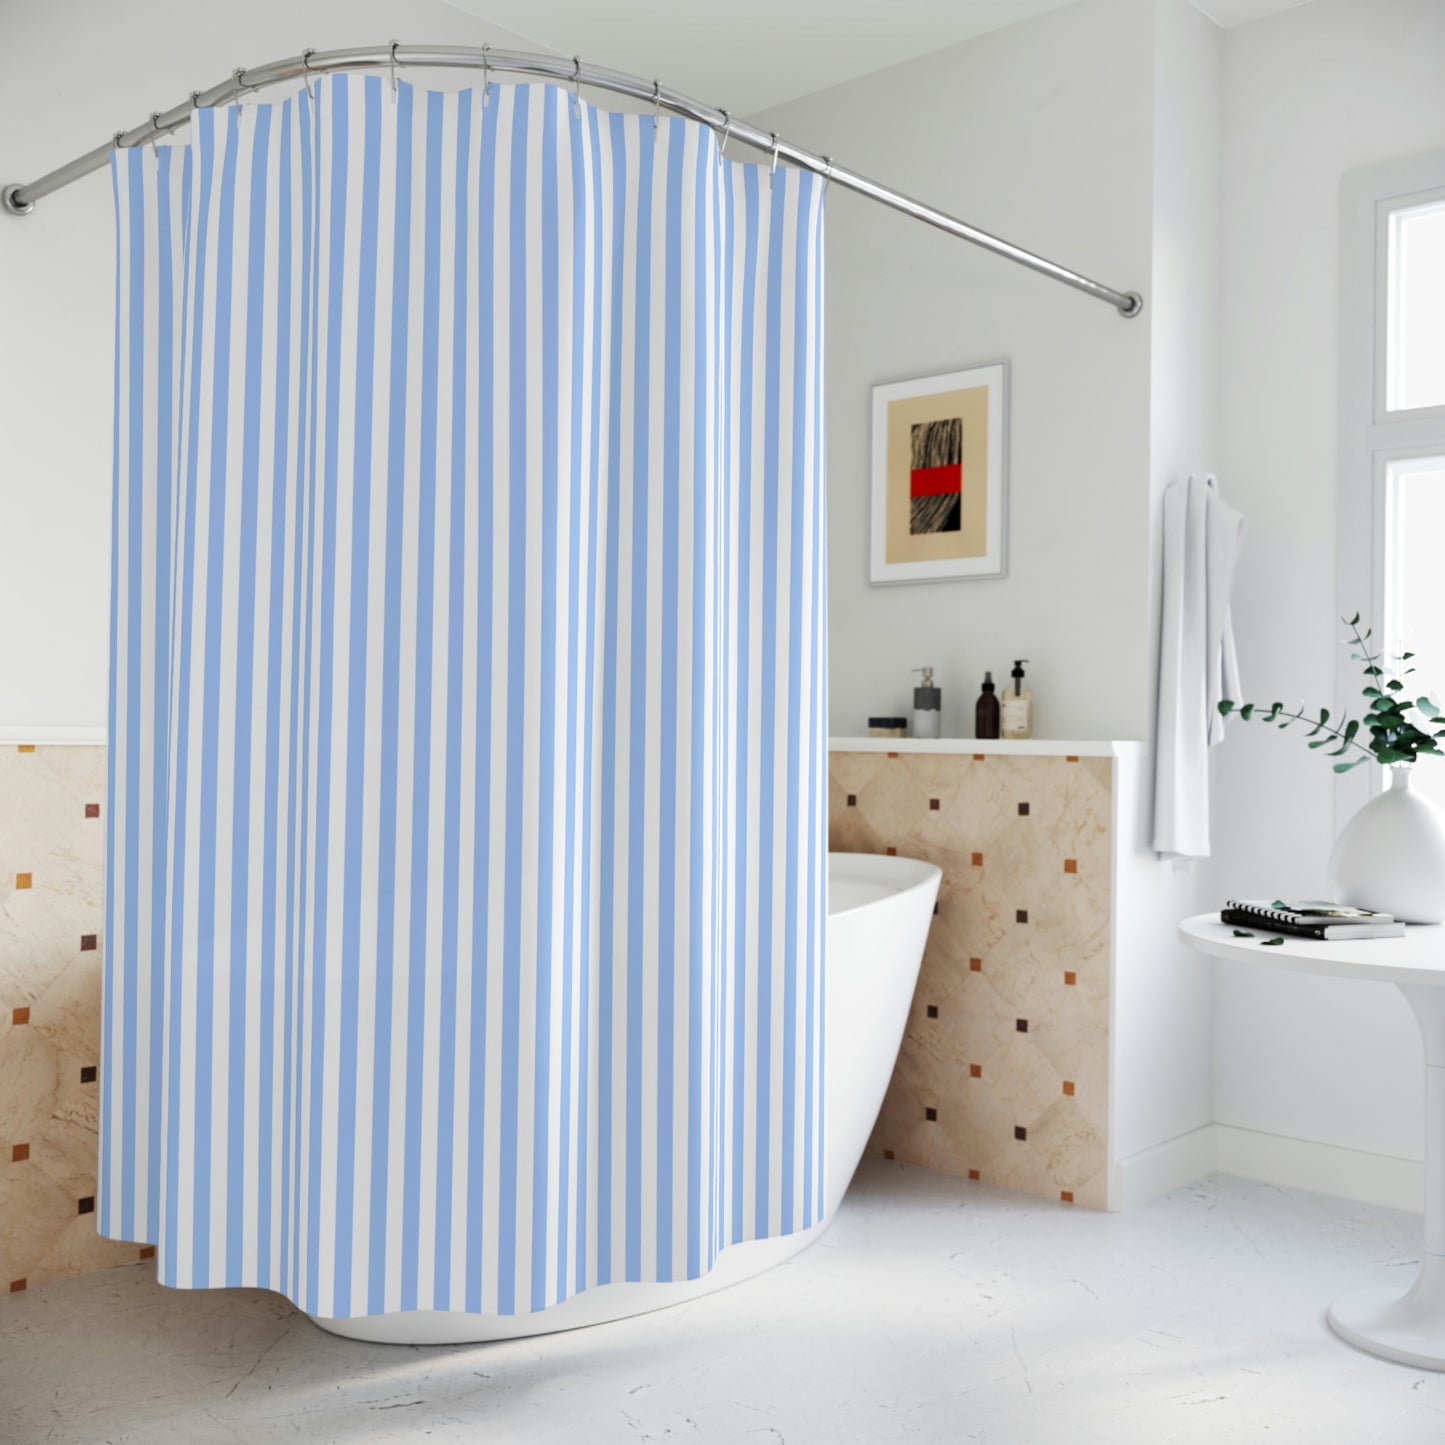 Blue Striped Shower Curtain, White French Farmhouse Fabric Unique Bath Bathroom Decor Cool Unique Home Gift 71" x 74"